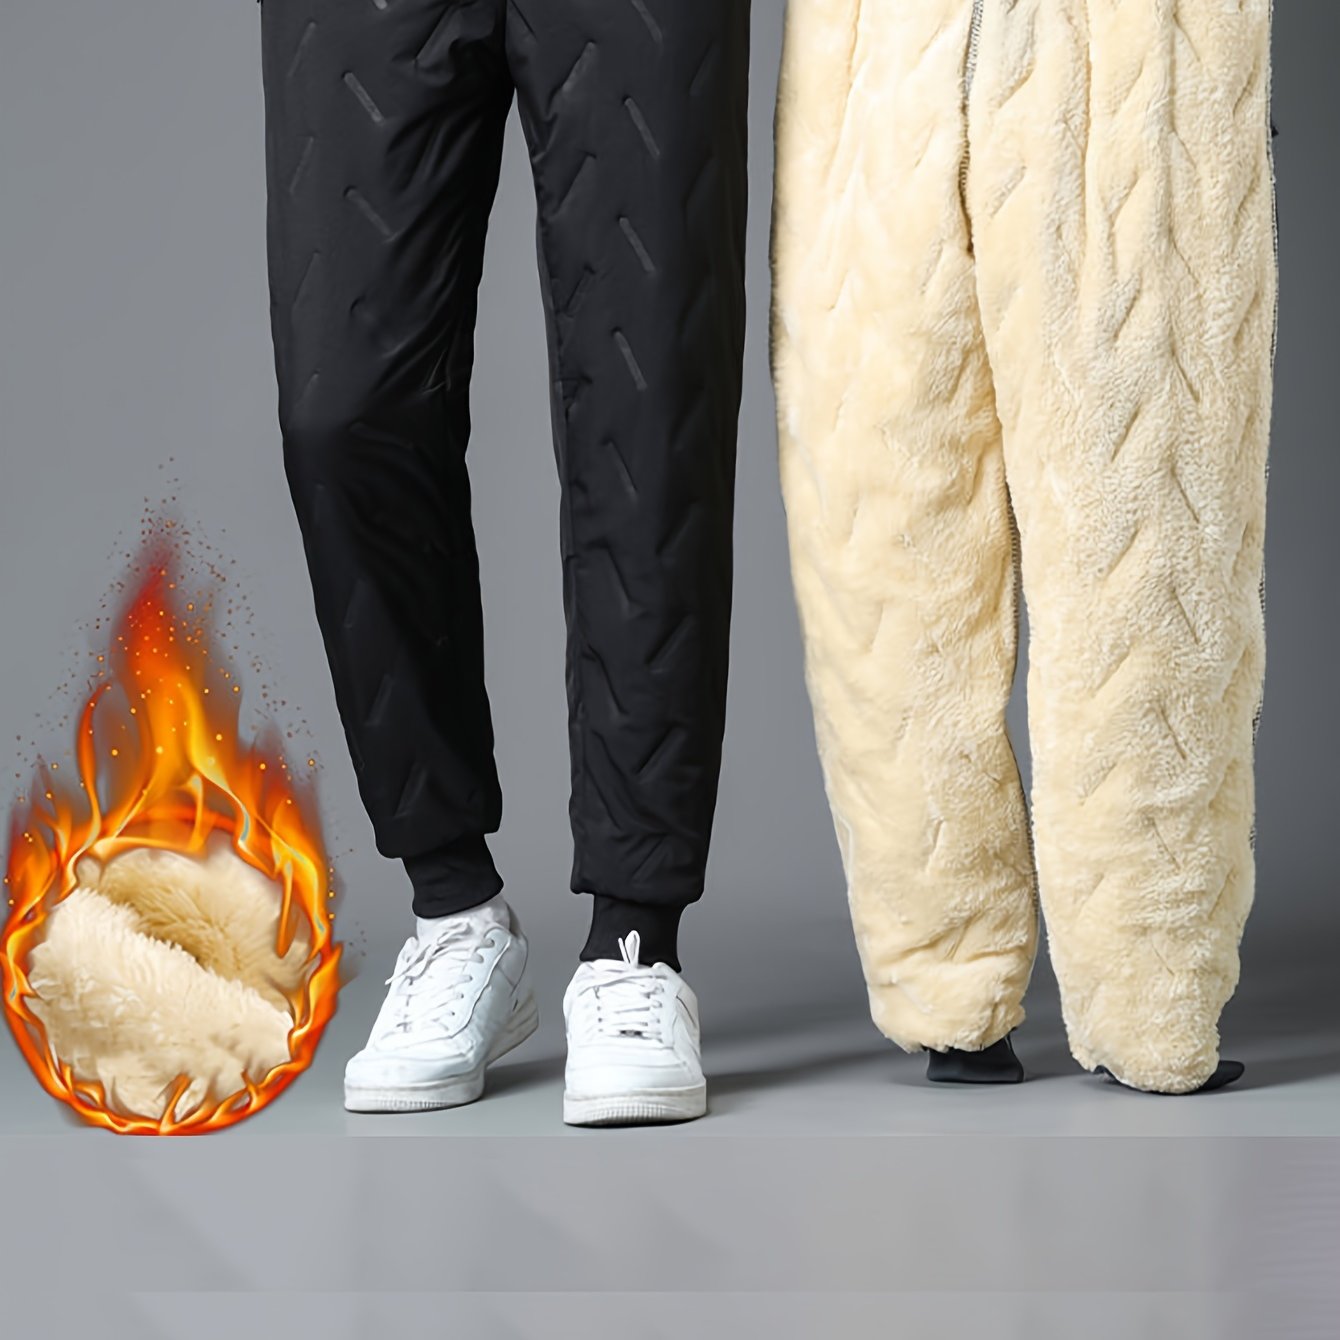 kkboxly Men's Winter Warm Fleece Lined Pants Outdoor Sports